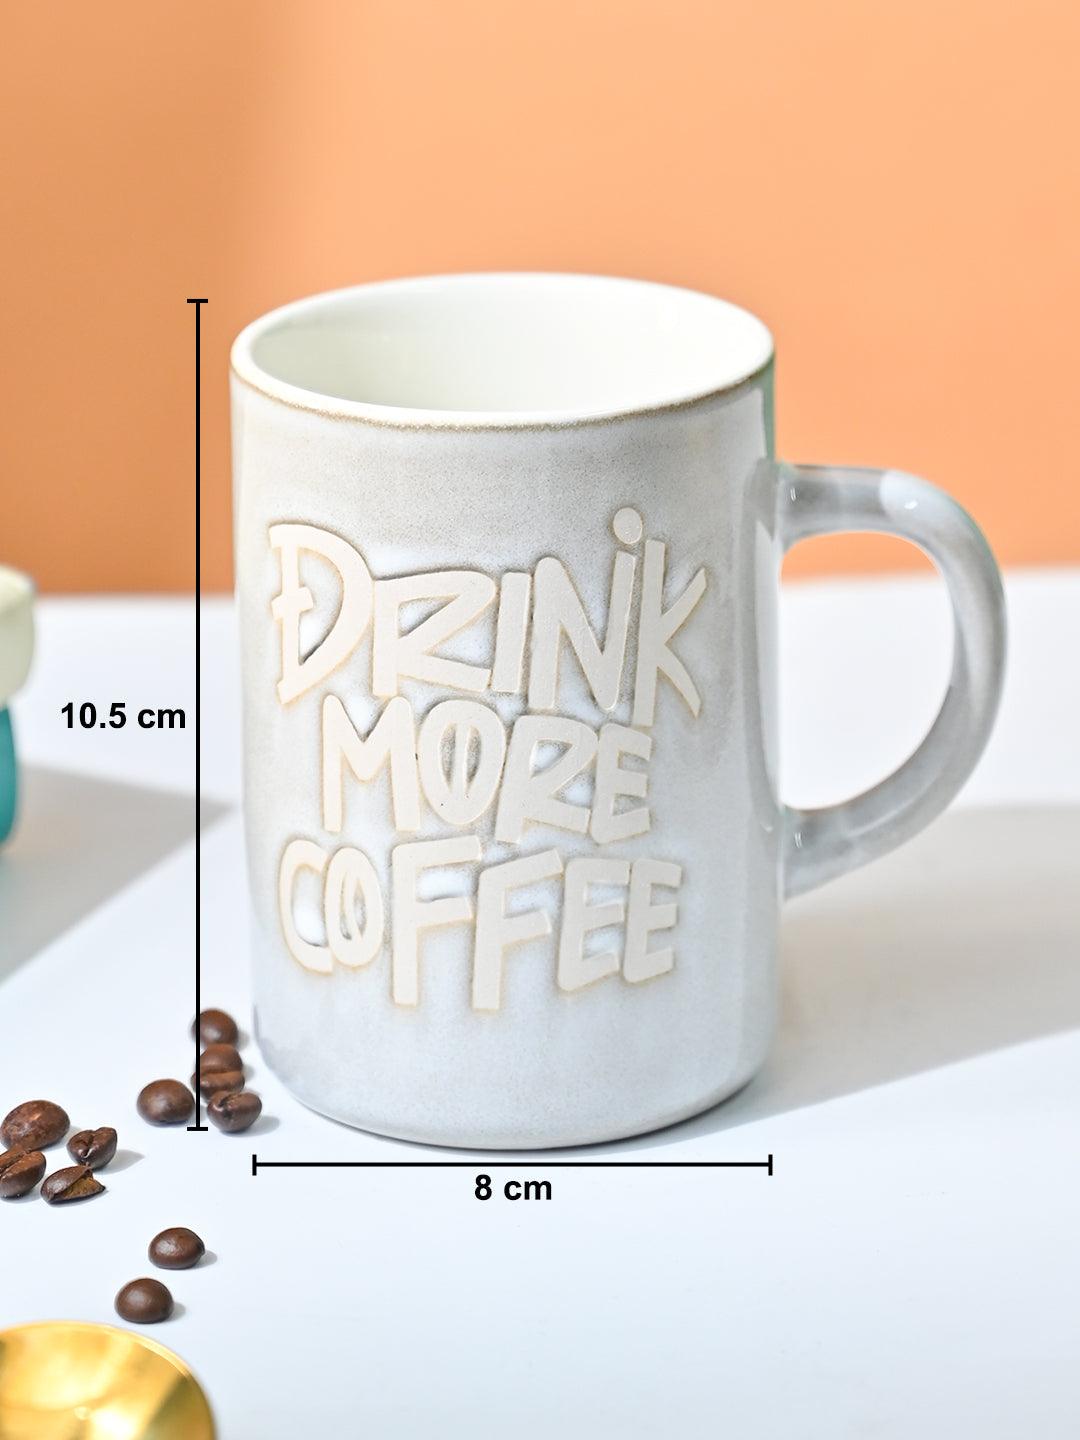 VON CASA Light Blue Mug (Drink More Coffee) - 420Ml